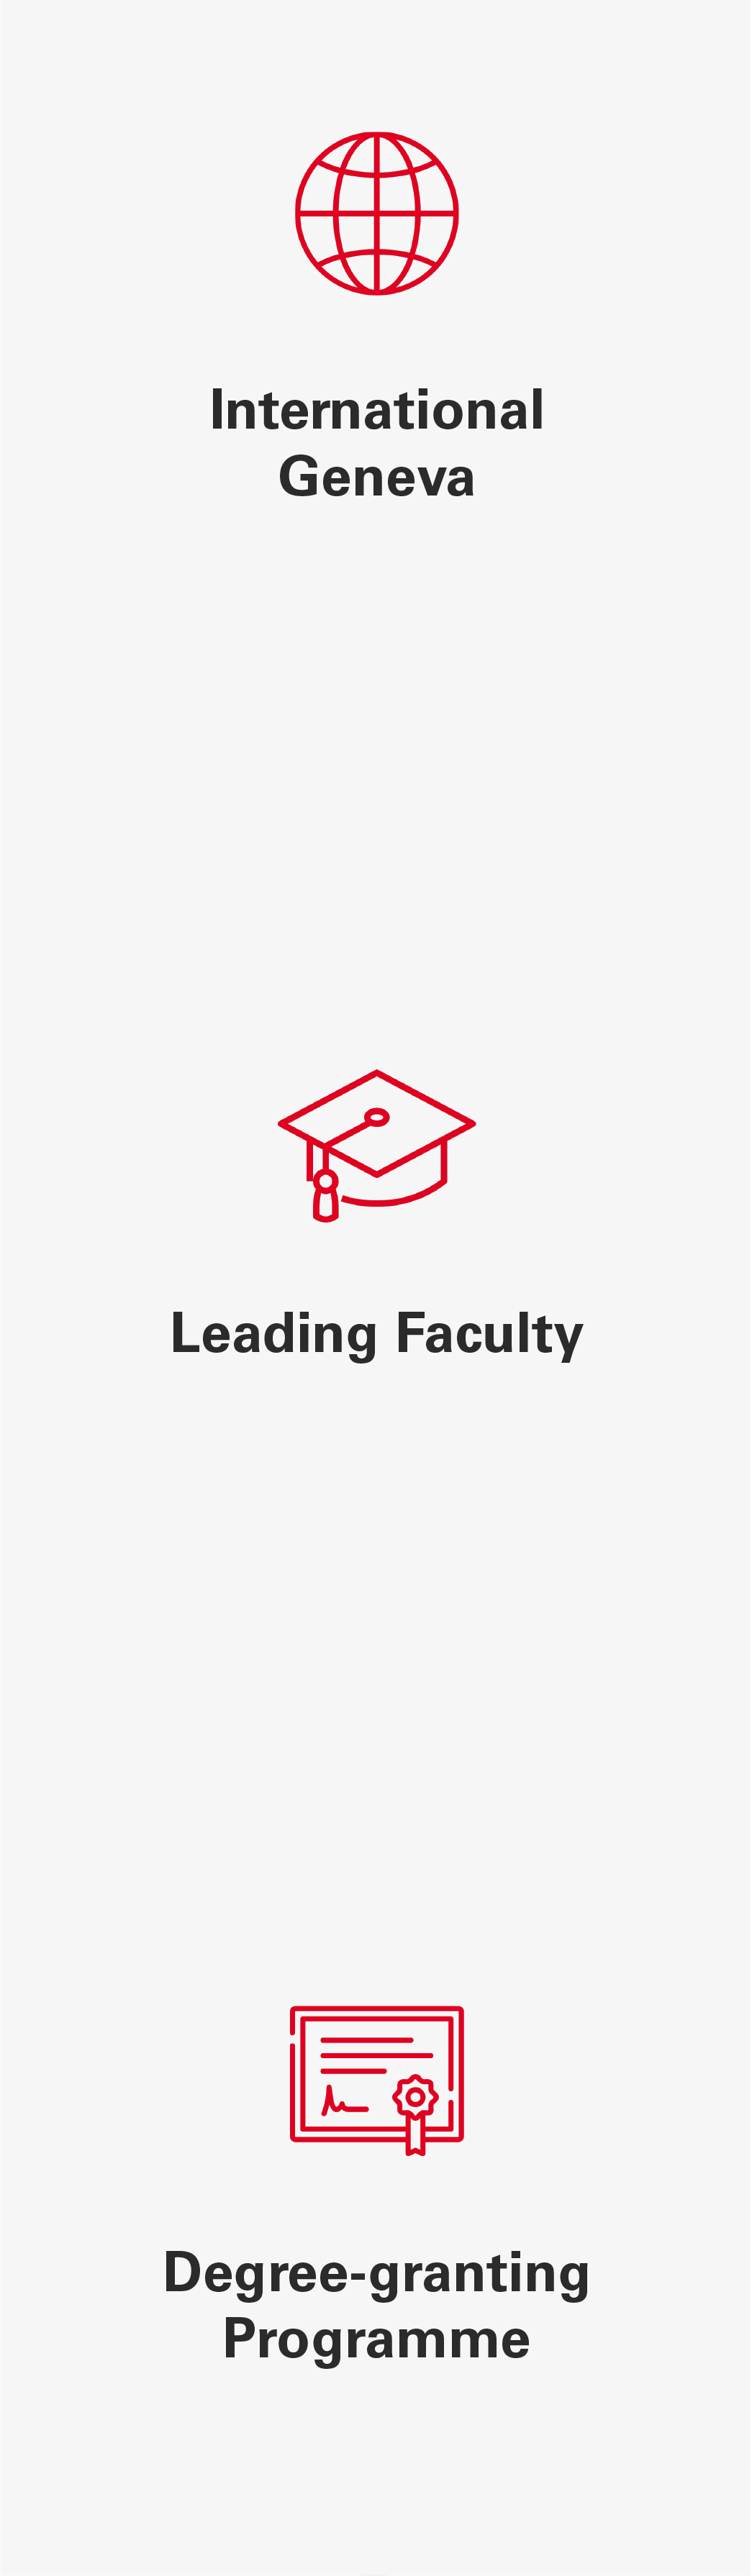 Infographic - International Geneva - Community of Practice - Leading Faculty - Degree-granting Programme